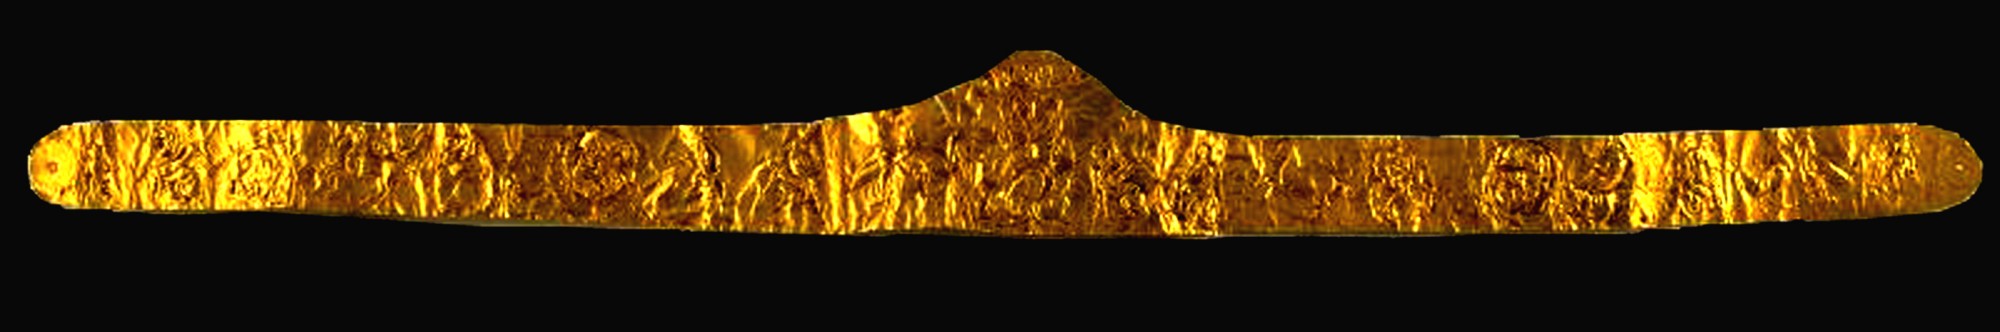 Dedeagach - Shapladere in Maritsa delta area - Tthracian gold diadem